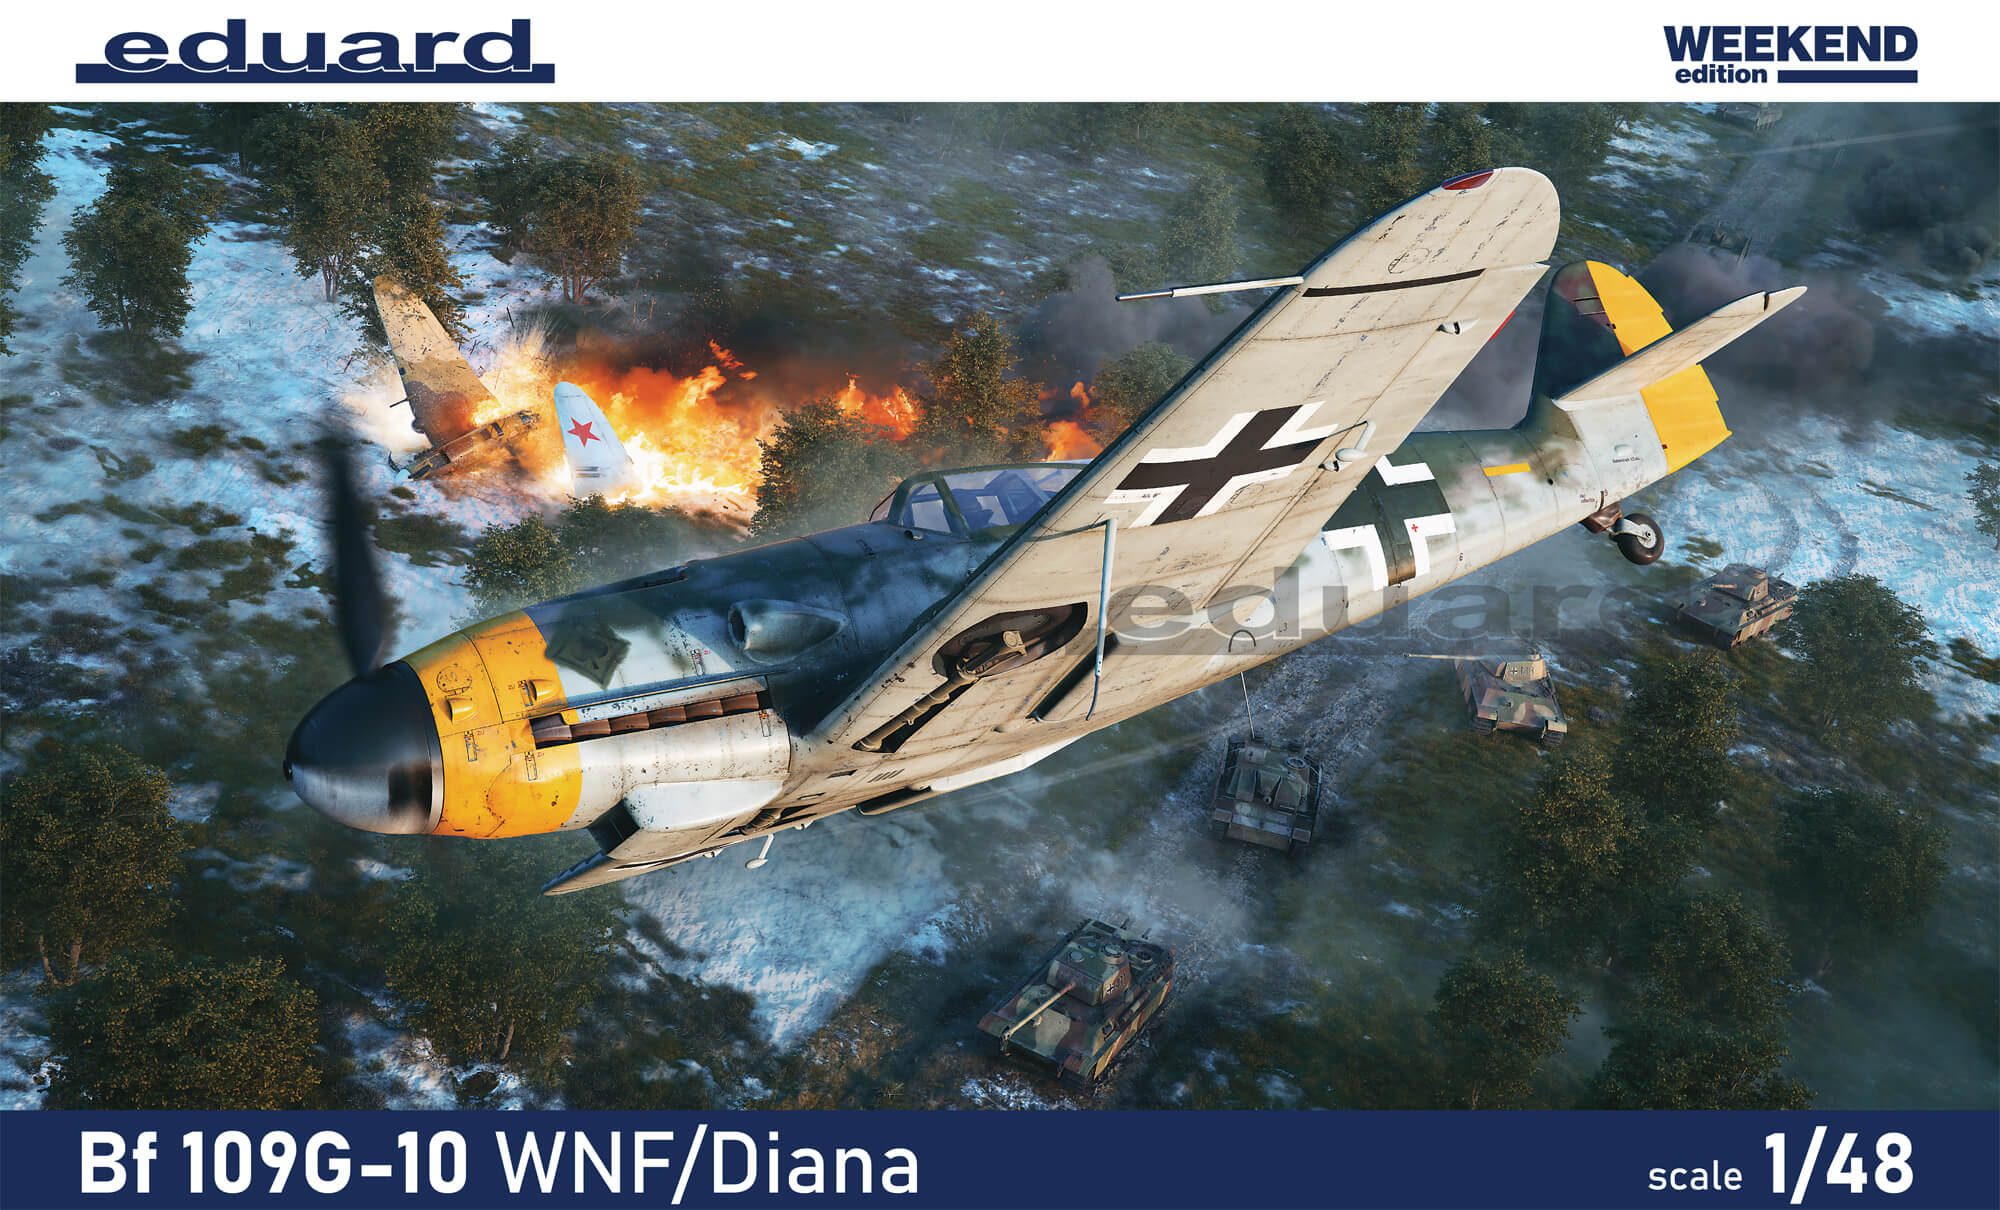 Fotografie 1/48 Bf 109G-10 WNF/Diana (Weekend edition)